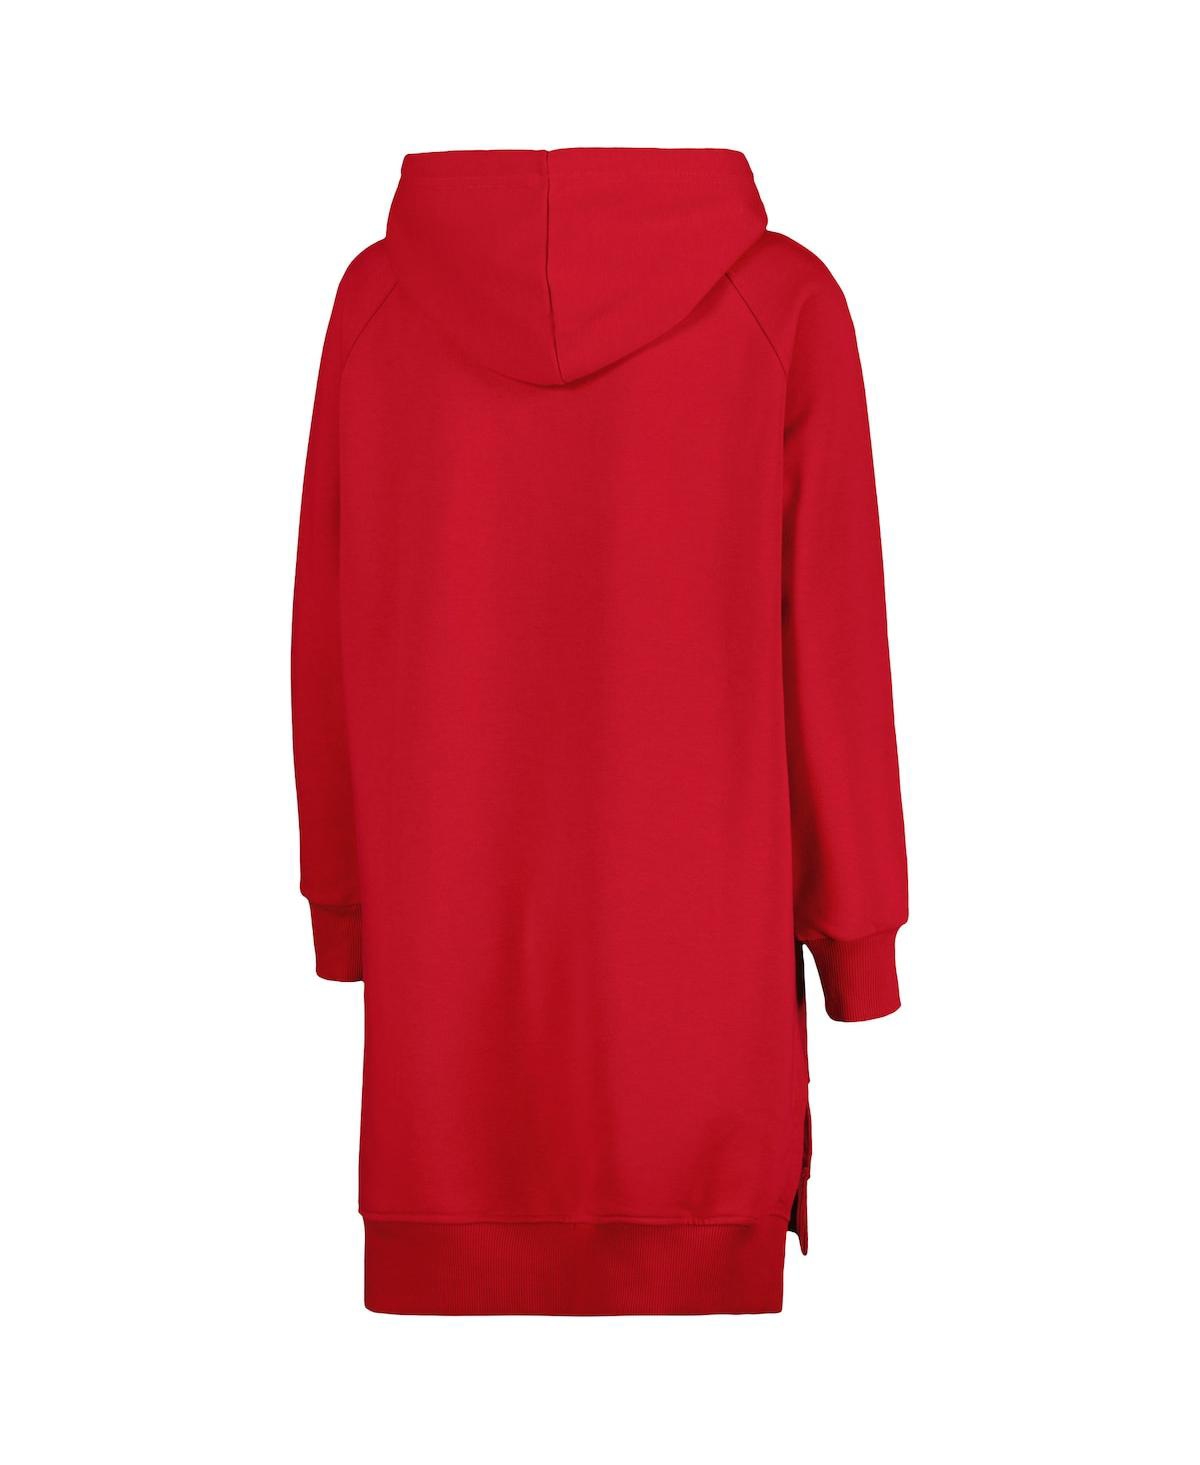 Shop Gameday Couture Women's  Crimson Indiana Hoosiers Take A Knee Raglan Hooded Sweatshirt Dress